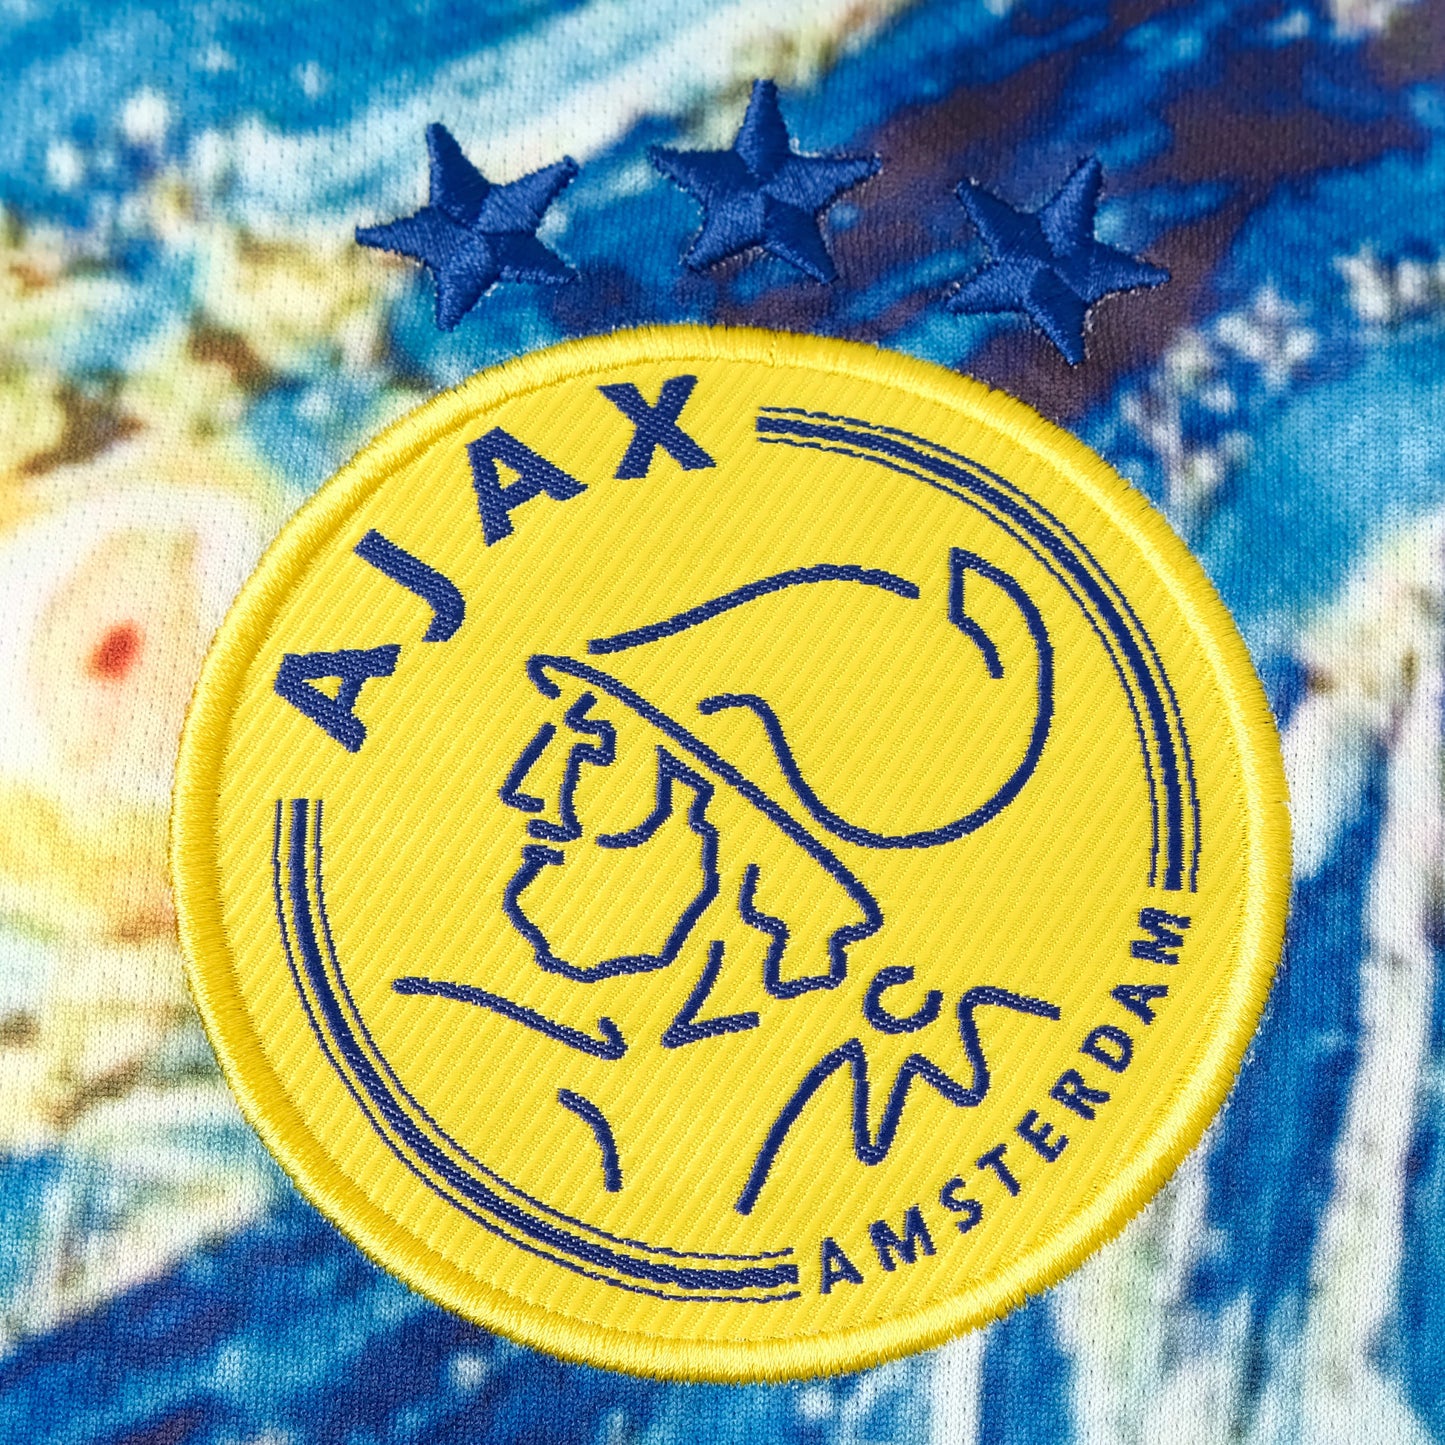 Ajax 23/24 Concept "Van Gogh" Jersey